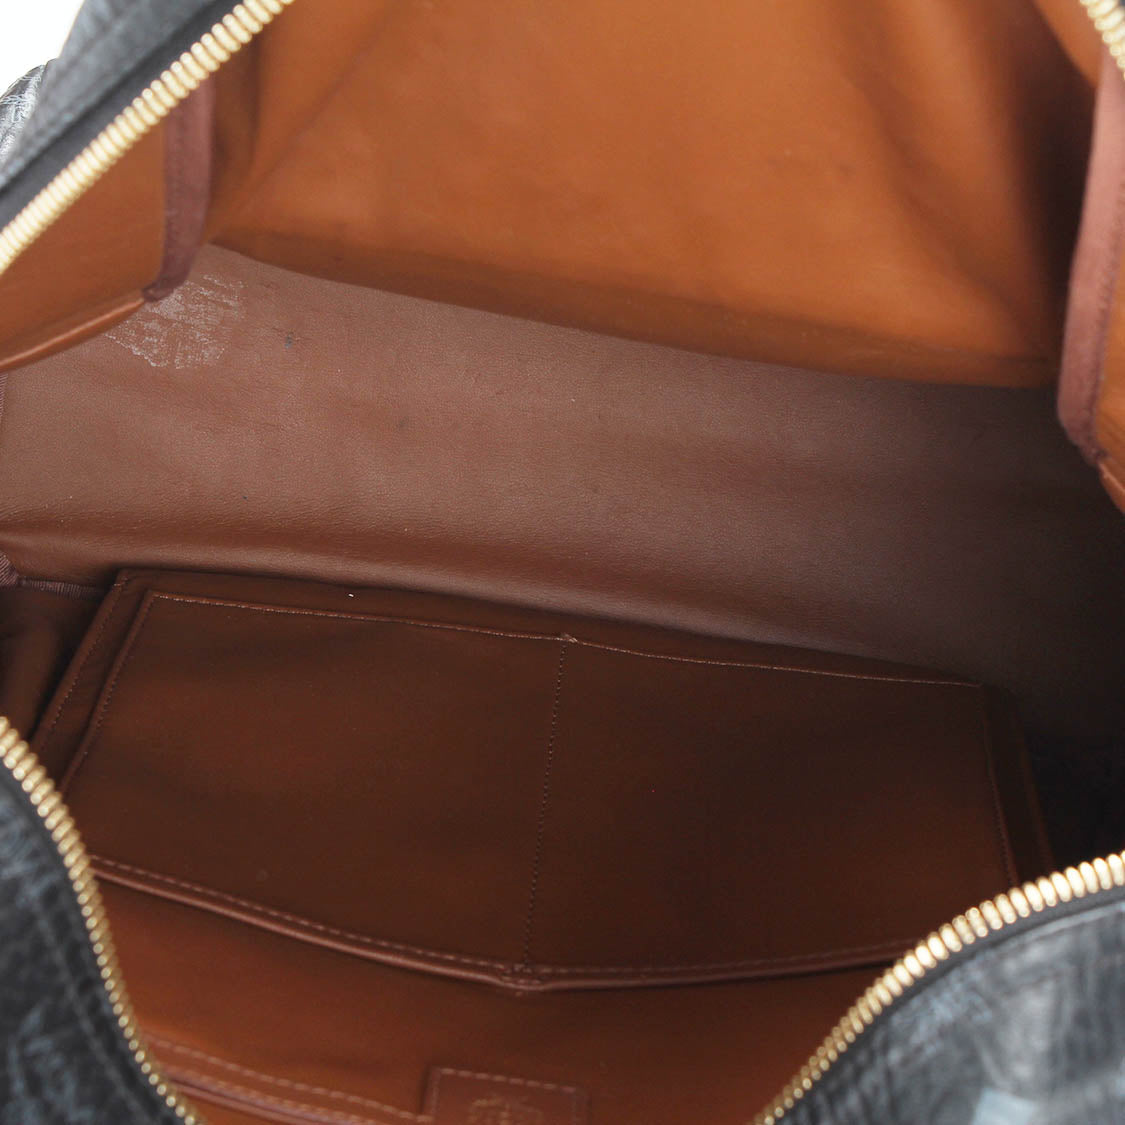 Studded Visetos Leather Backpack